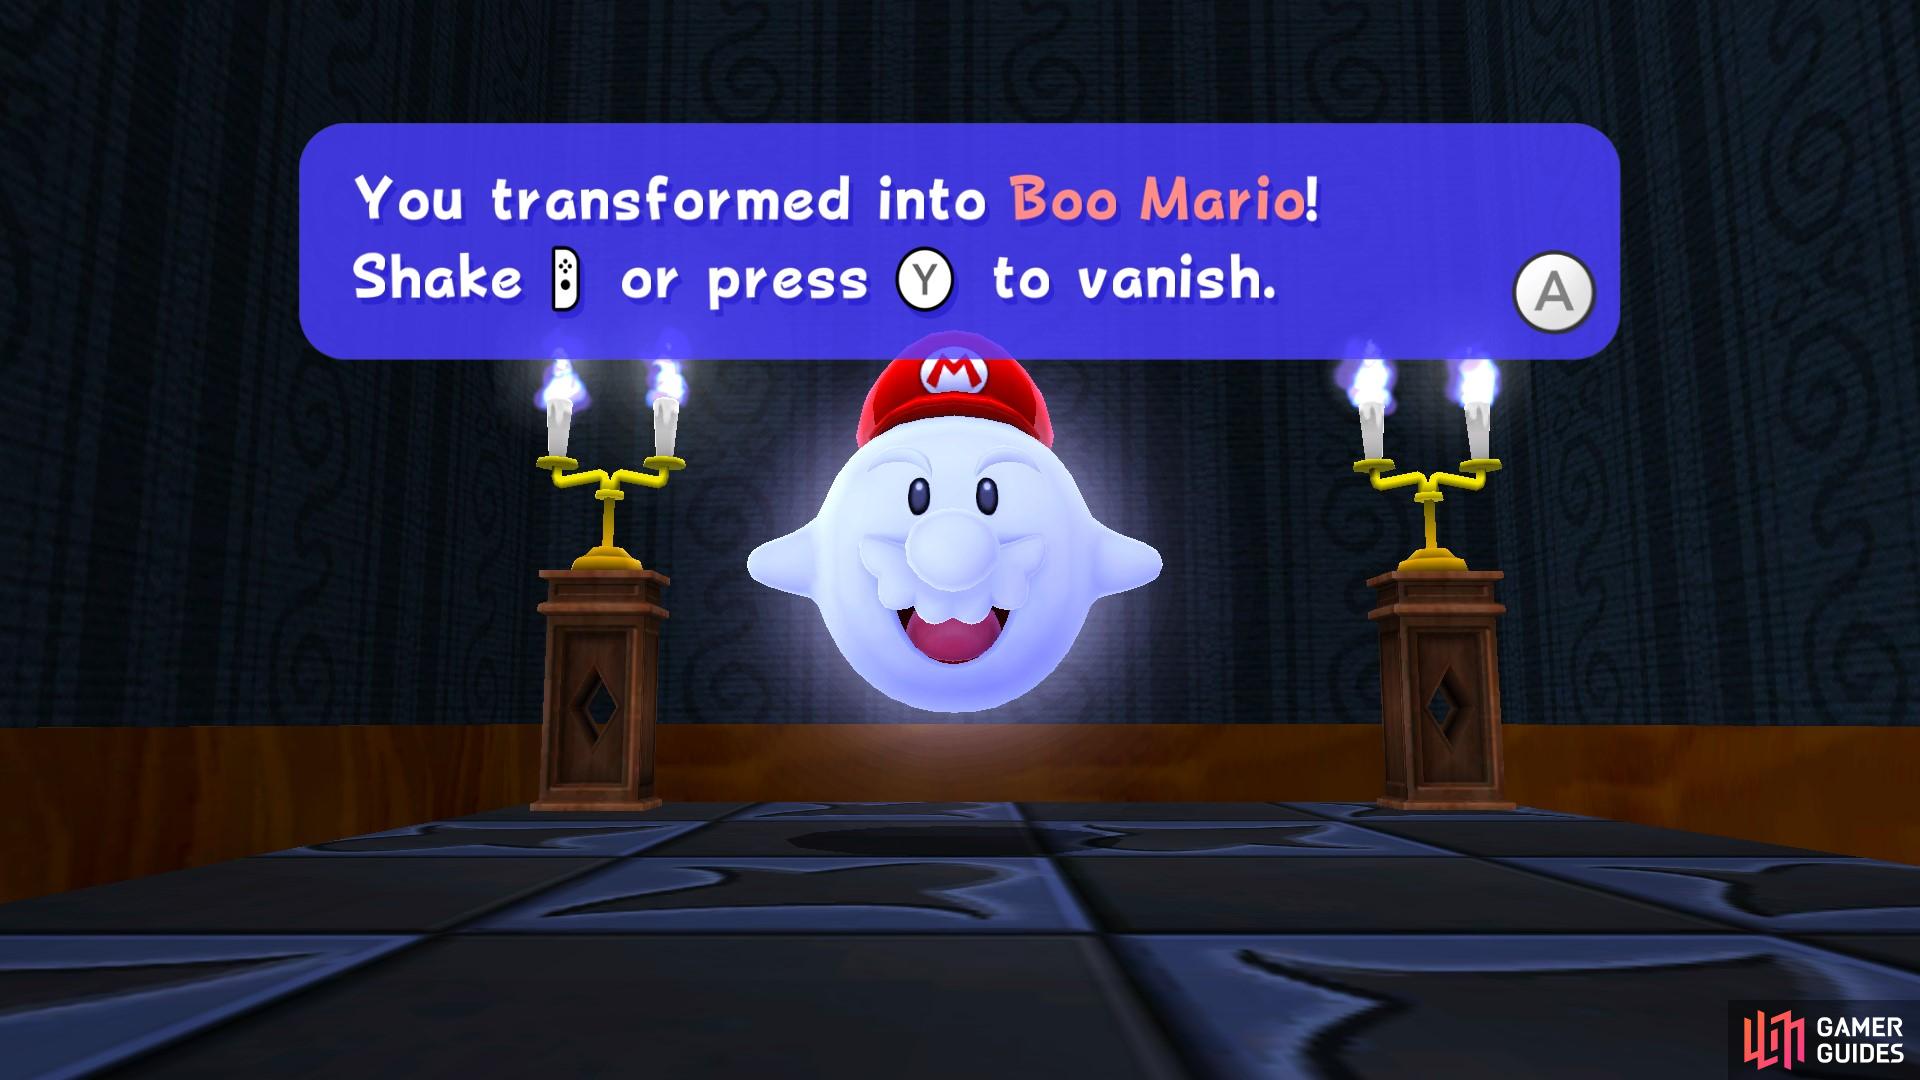 Boo Mario can go invisible and travel through walls!